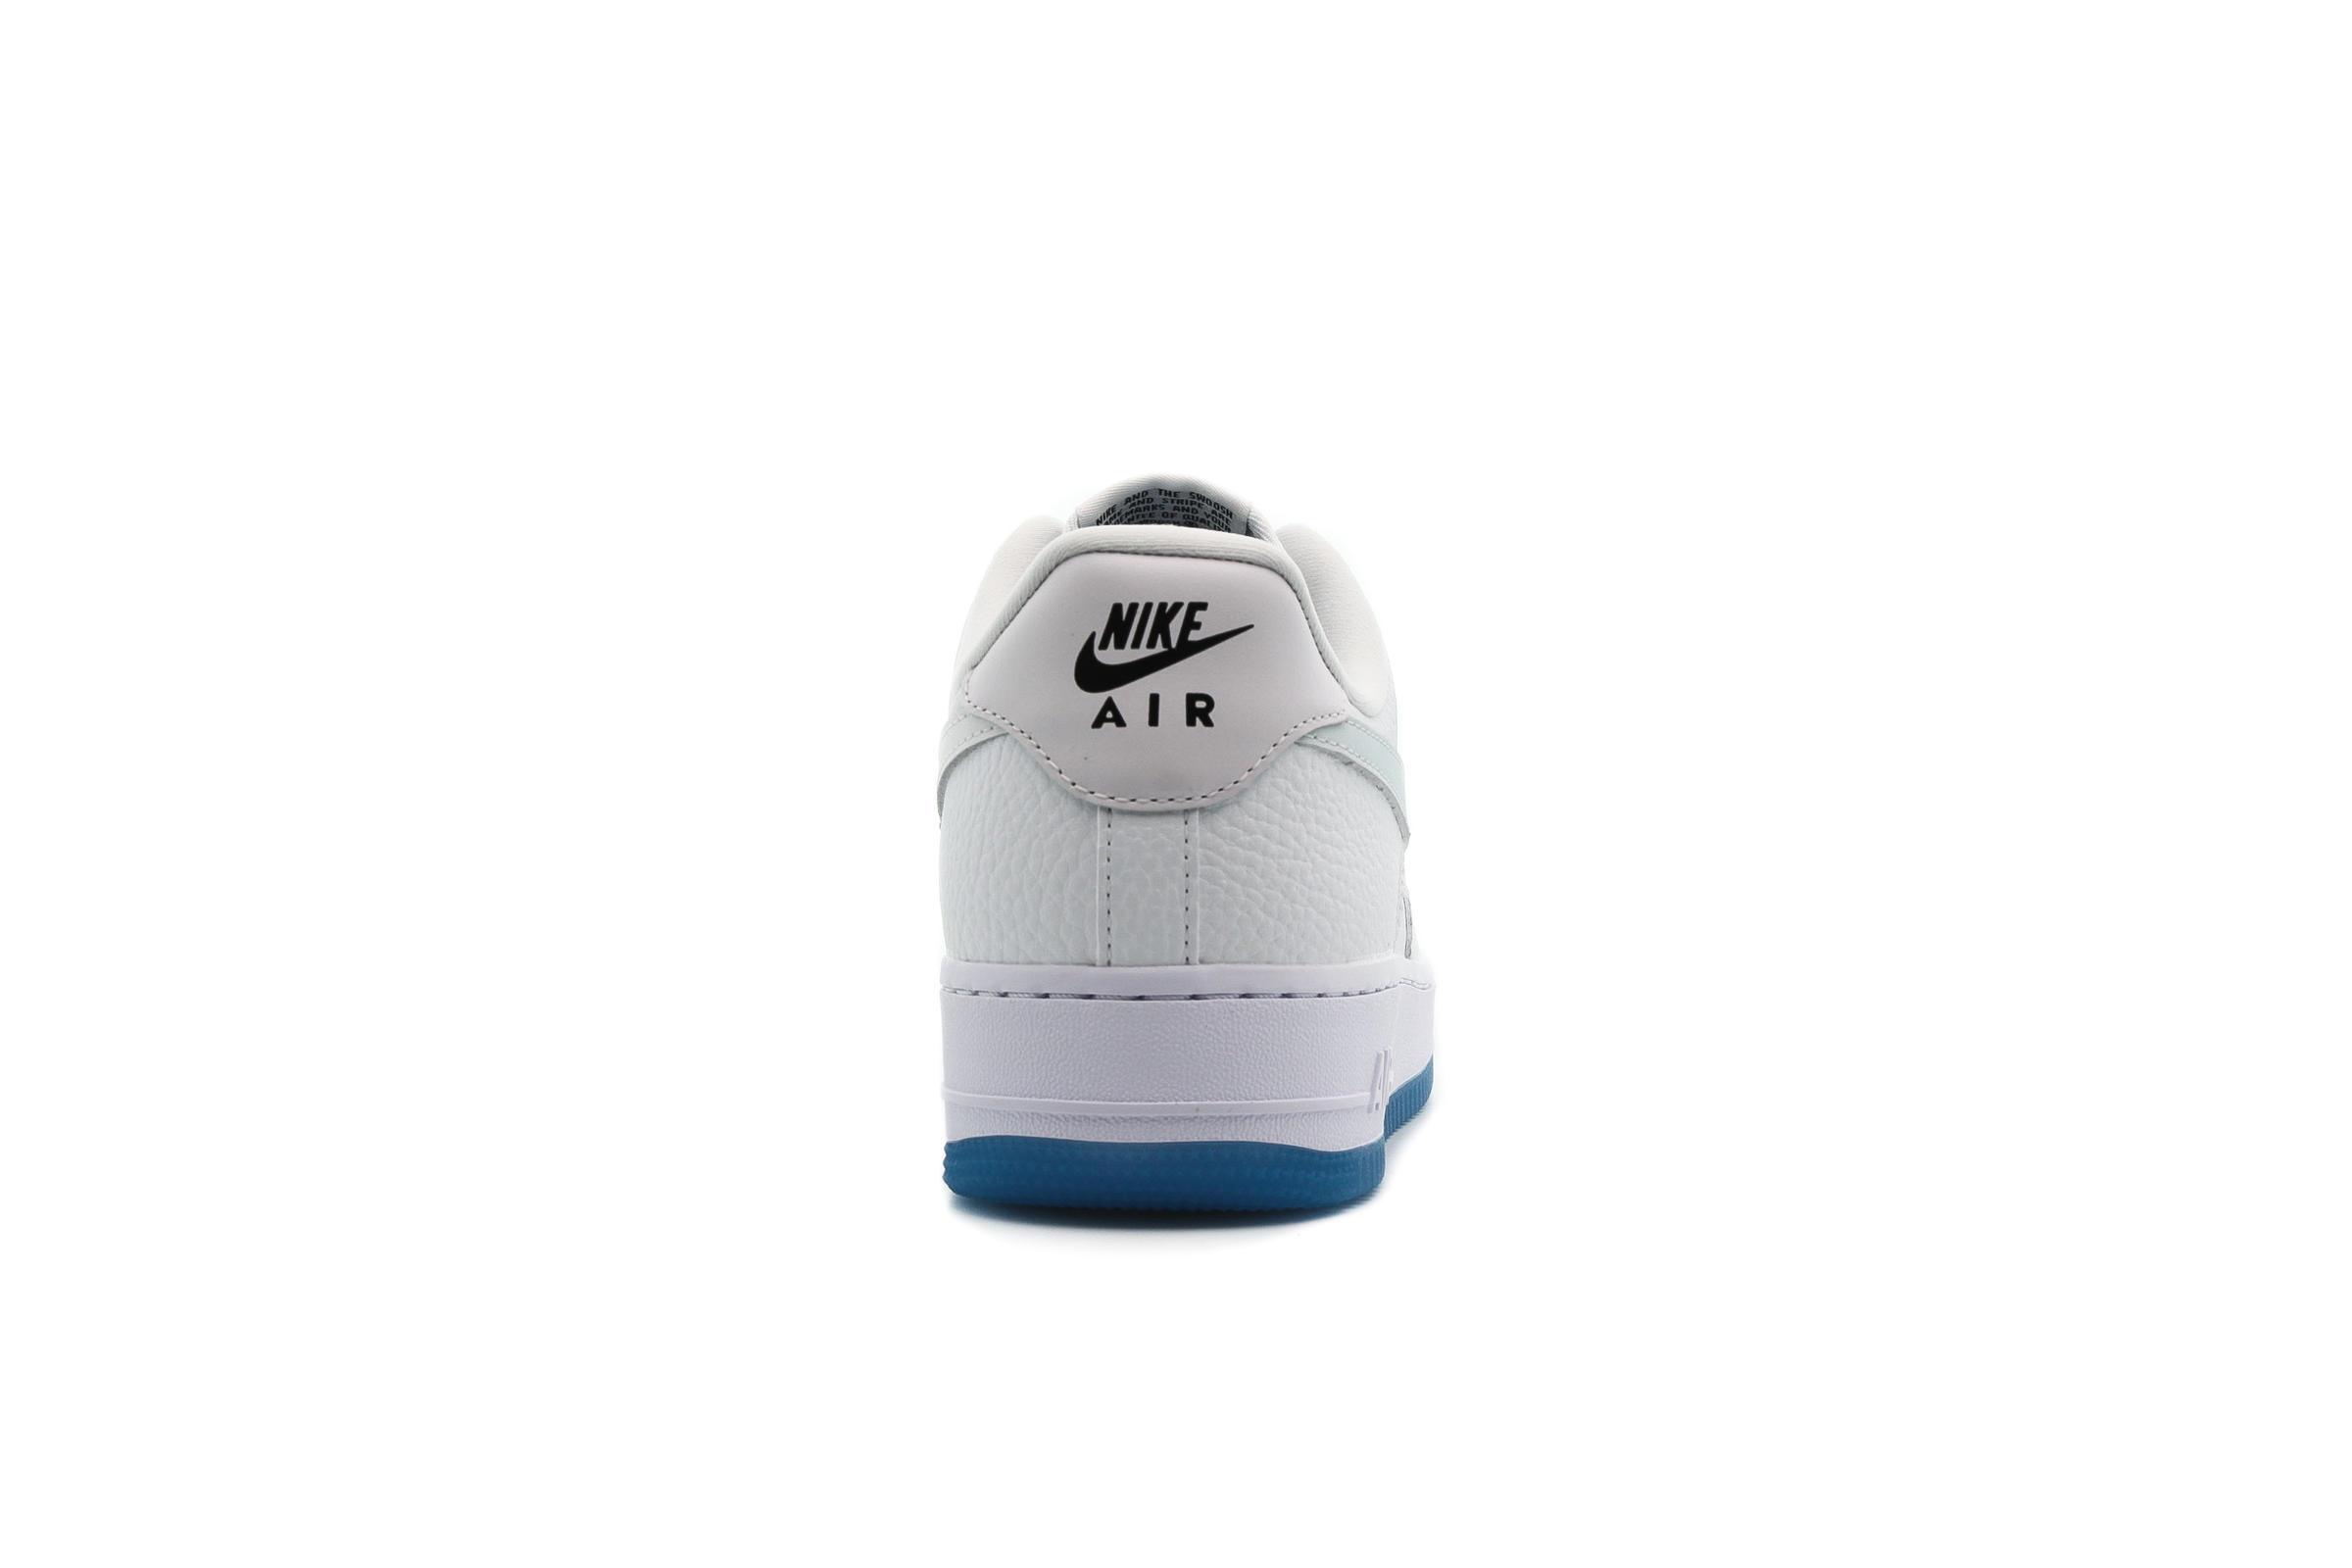 Nike WMNS AIR FORCE 1 '07 LX "UV REACTIVE"